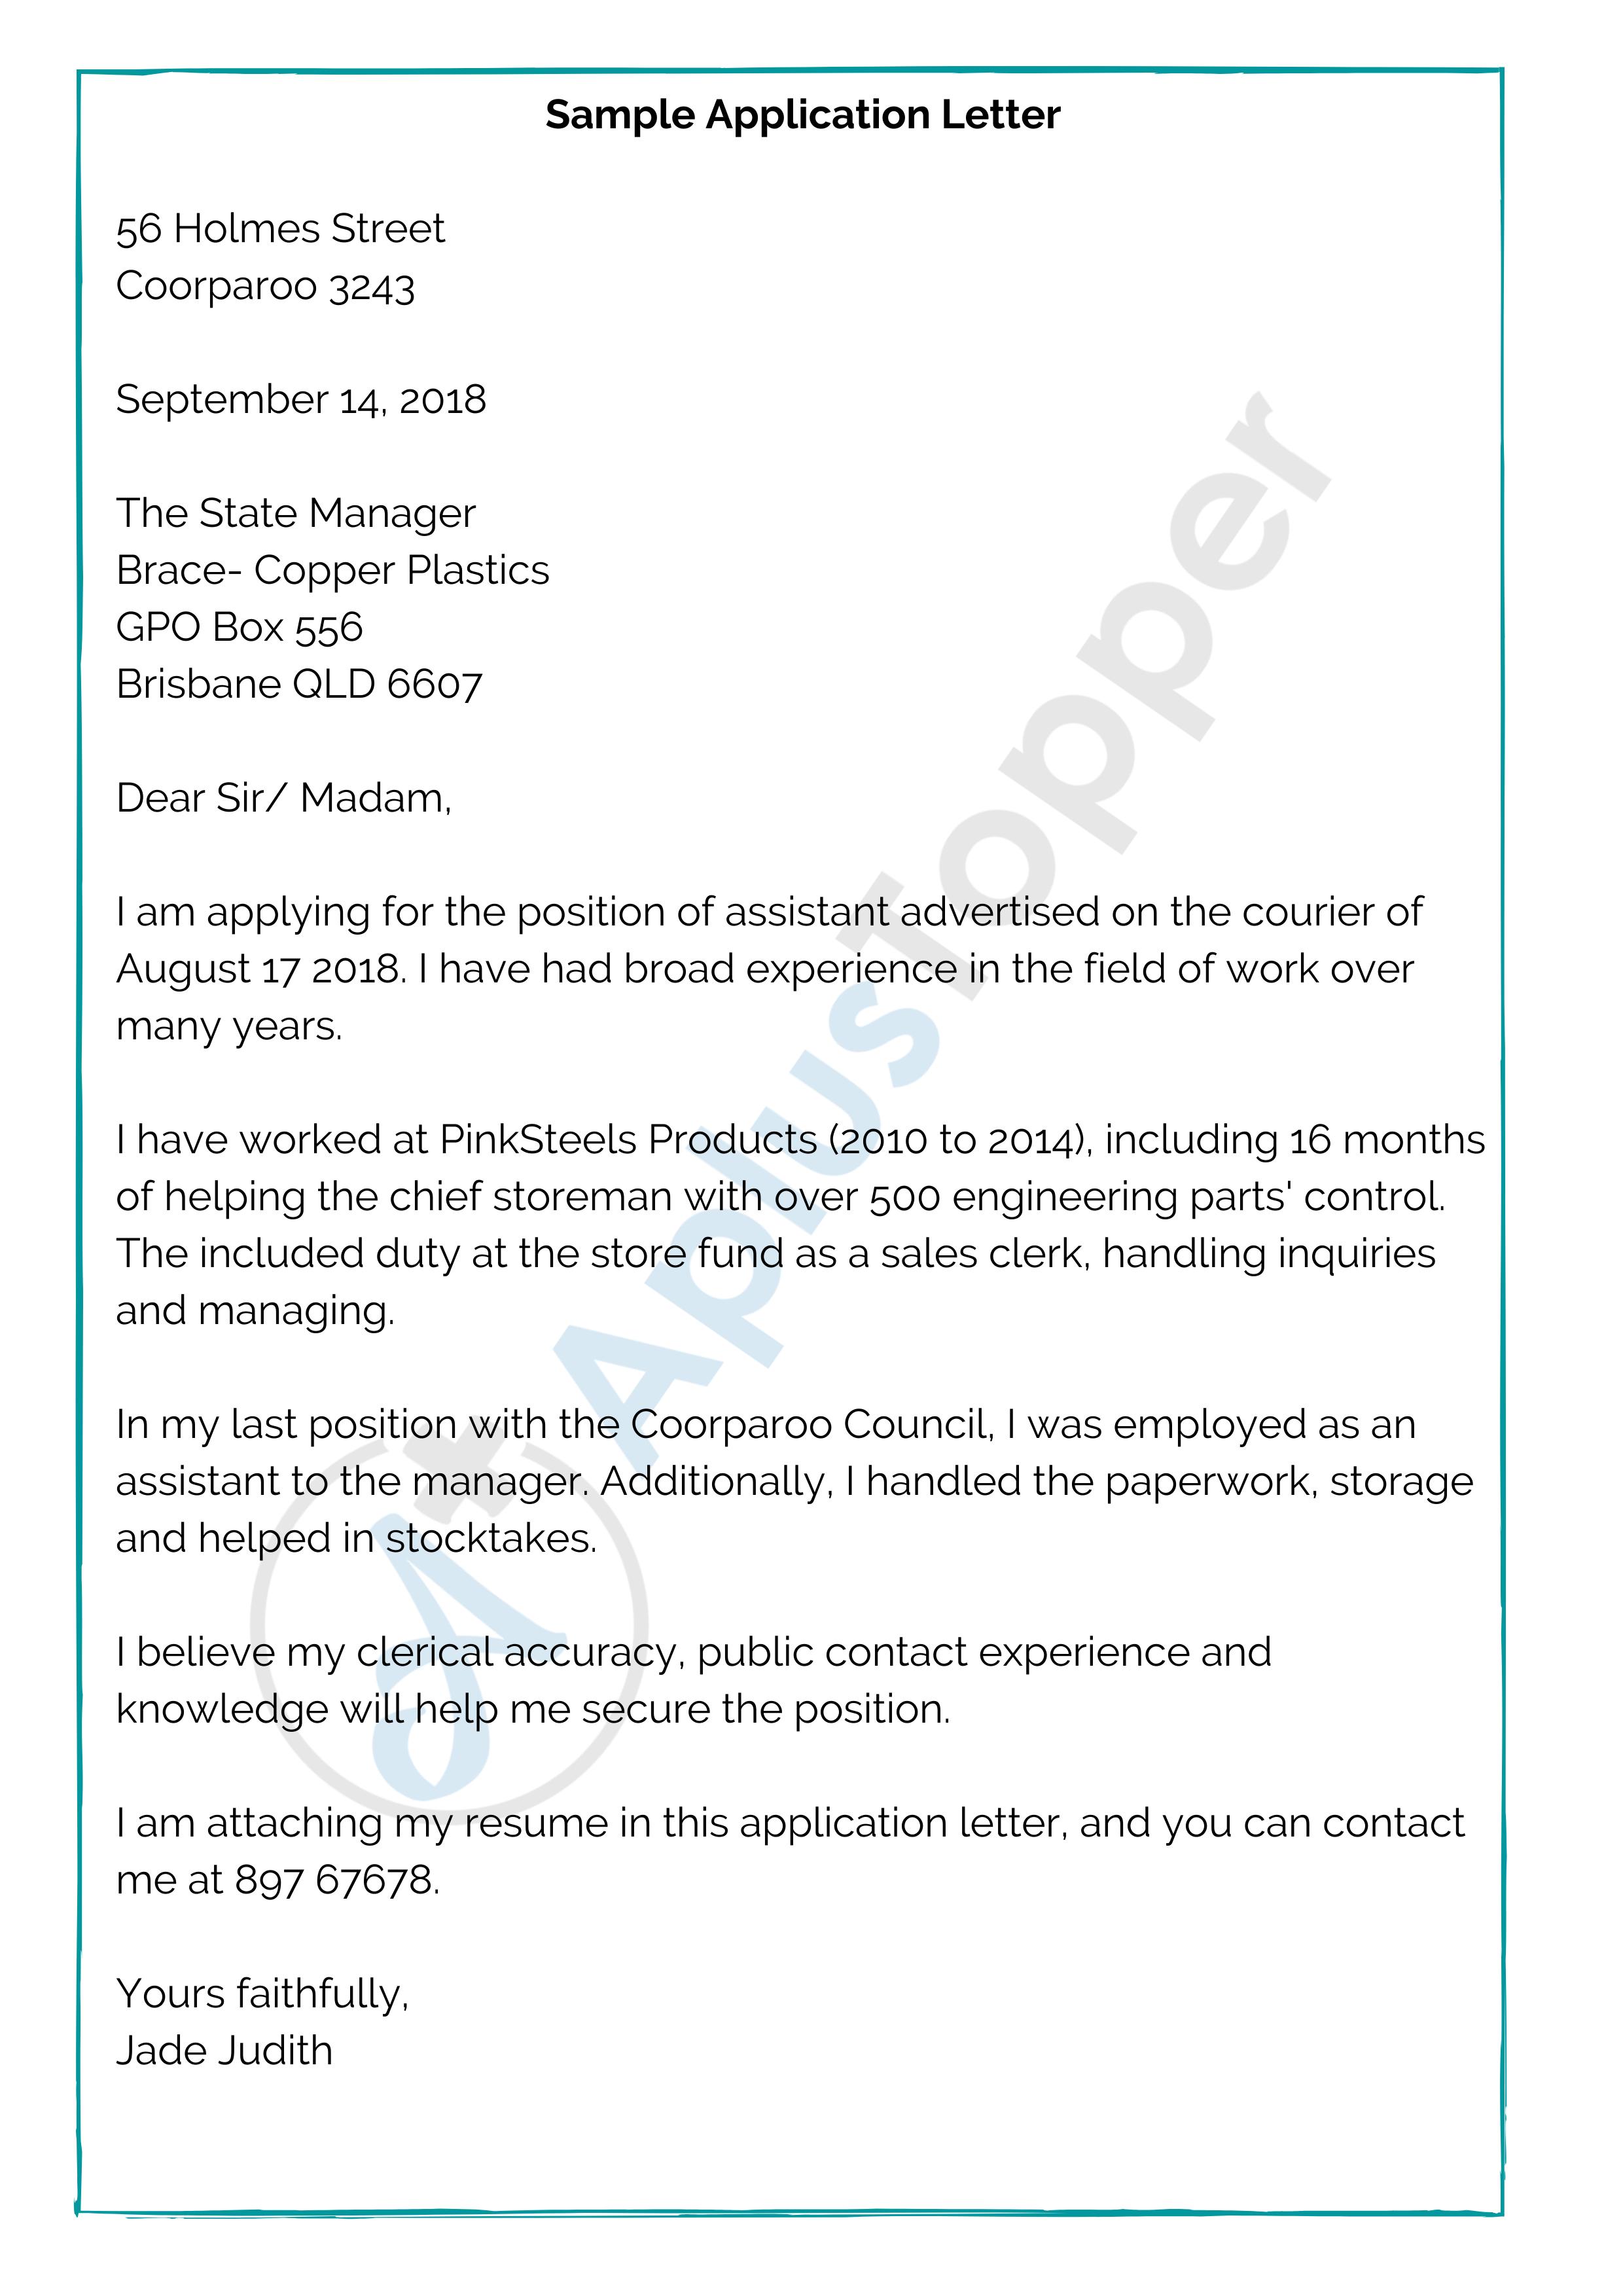 application letter definition in job